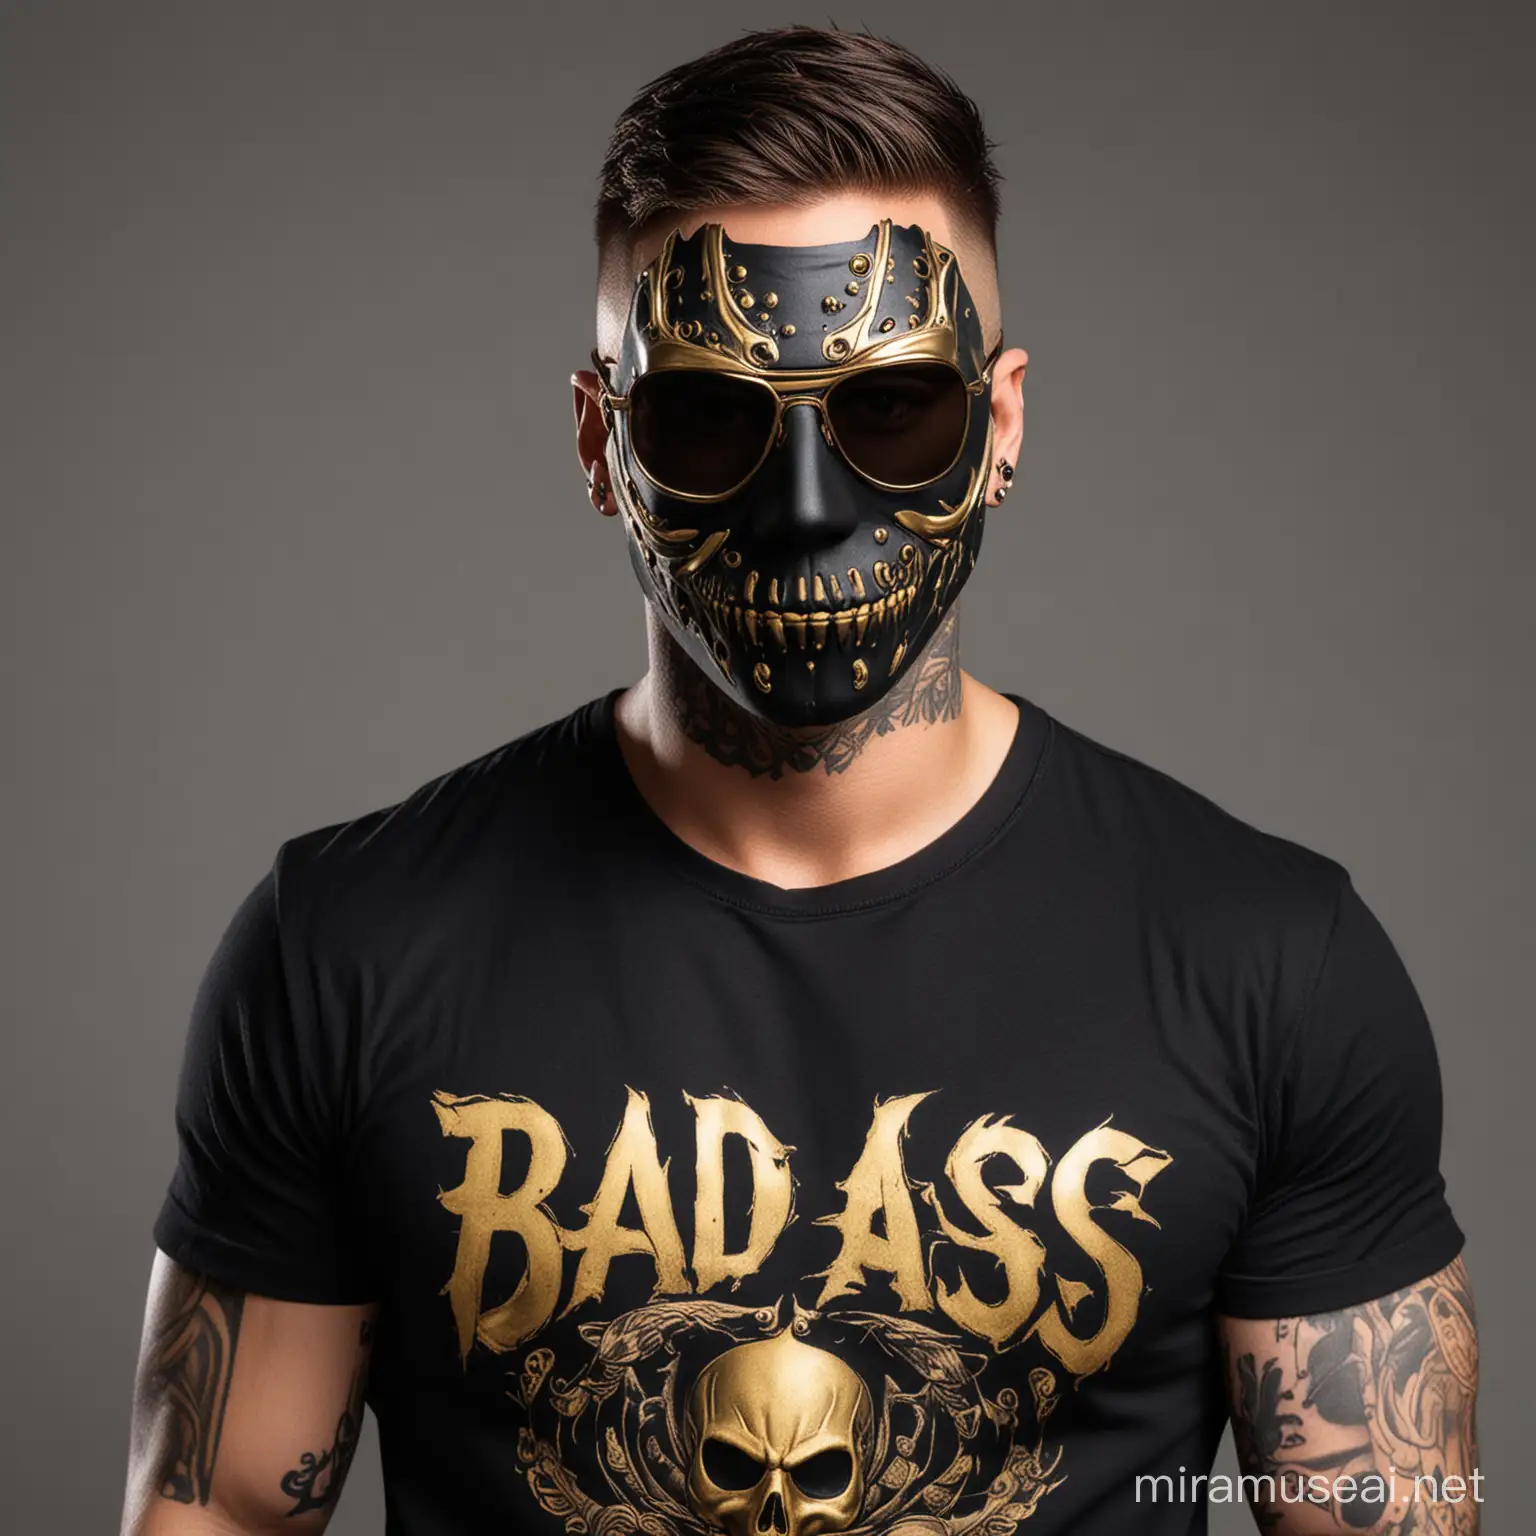 Stylish Guy with Jason Mask Tattoos and Gold Shades